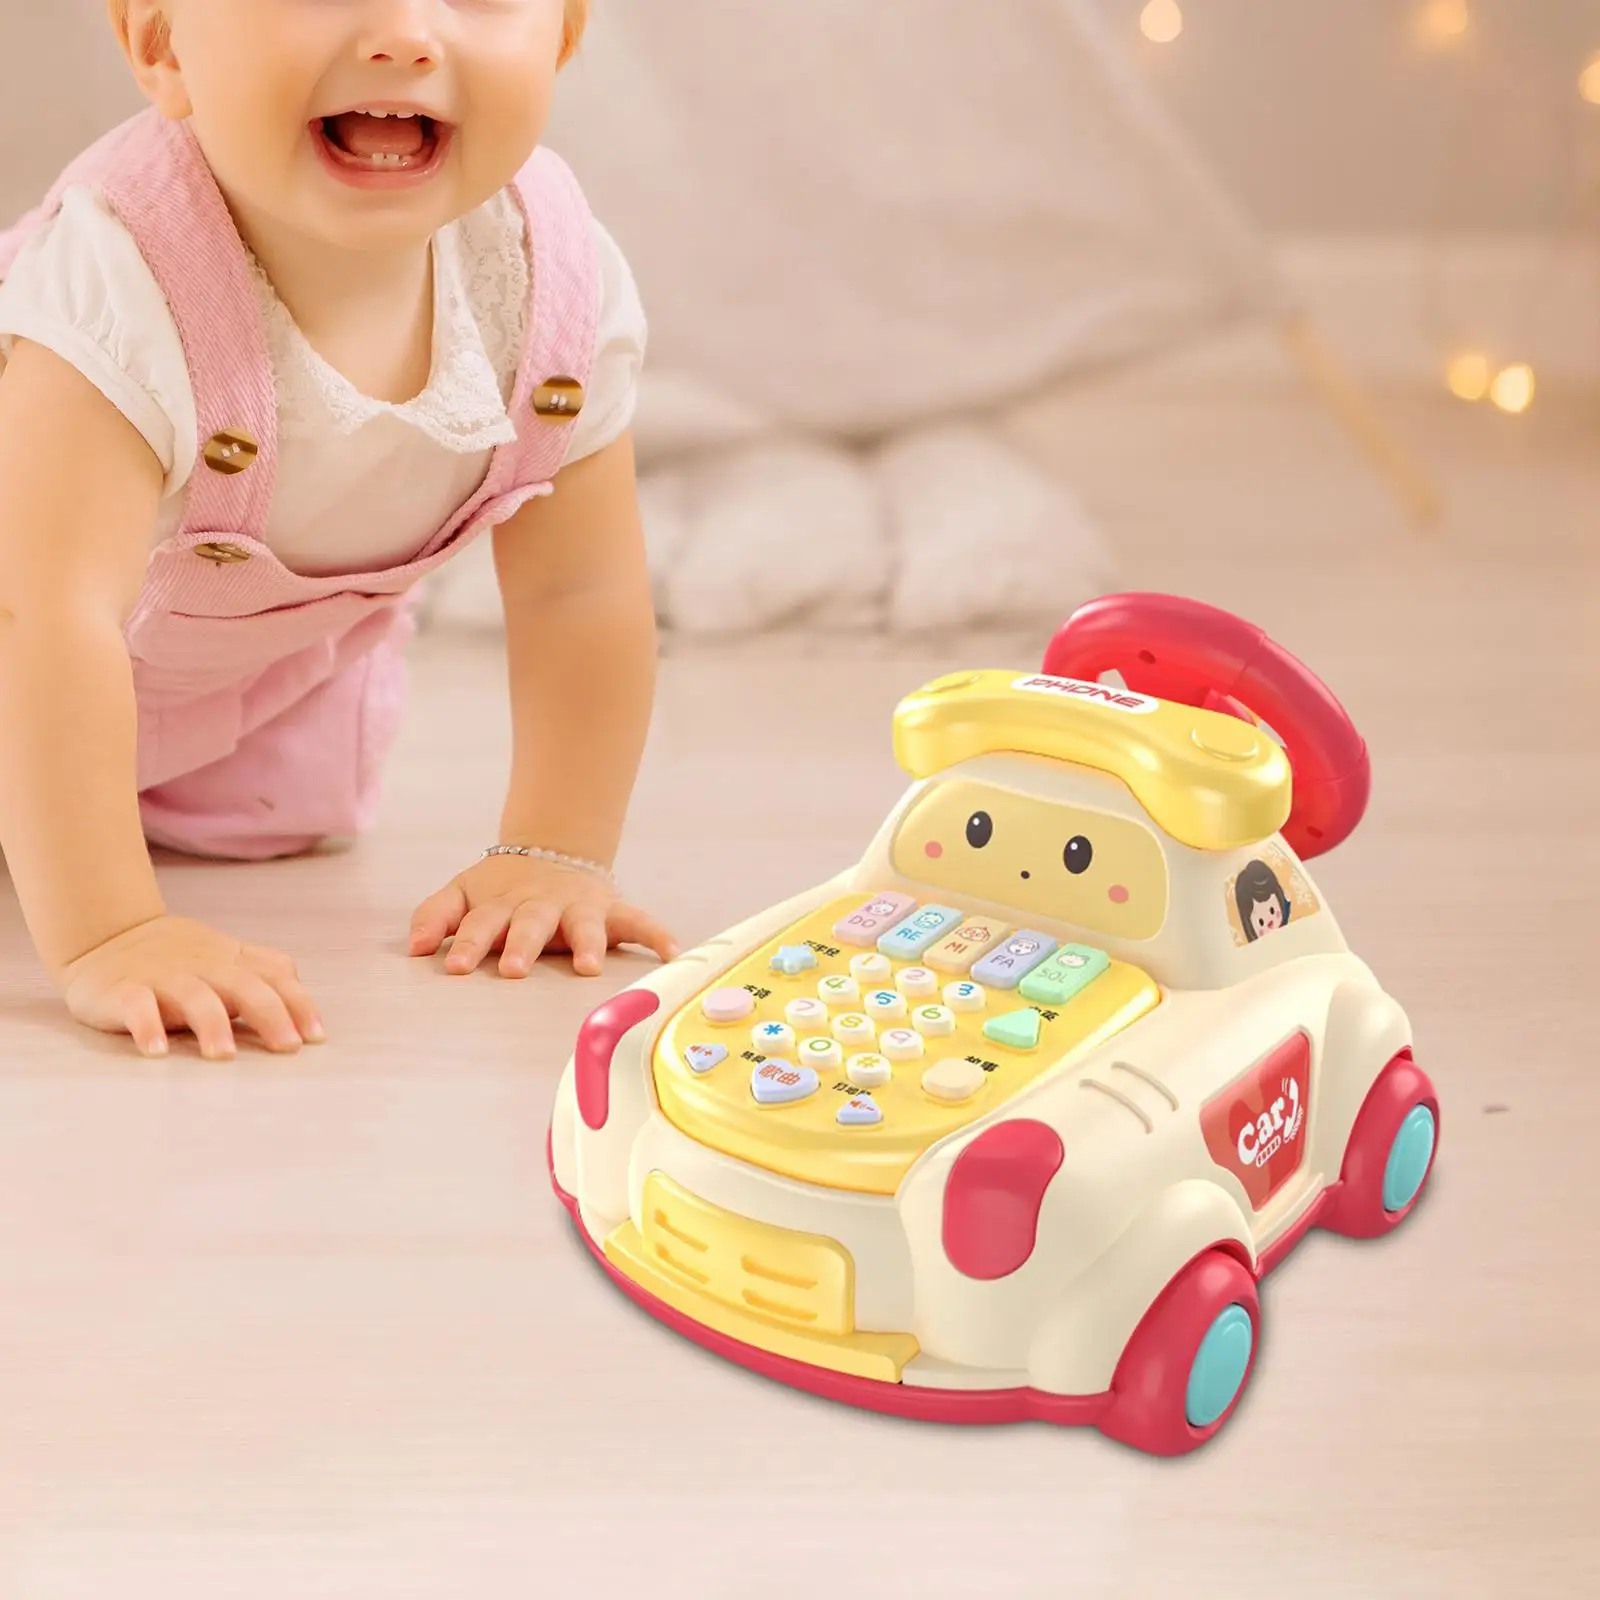 Baby Telephone Toy Children Phone Toy for Preschool Development Interaction